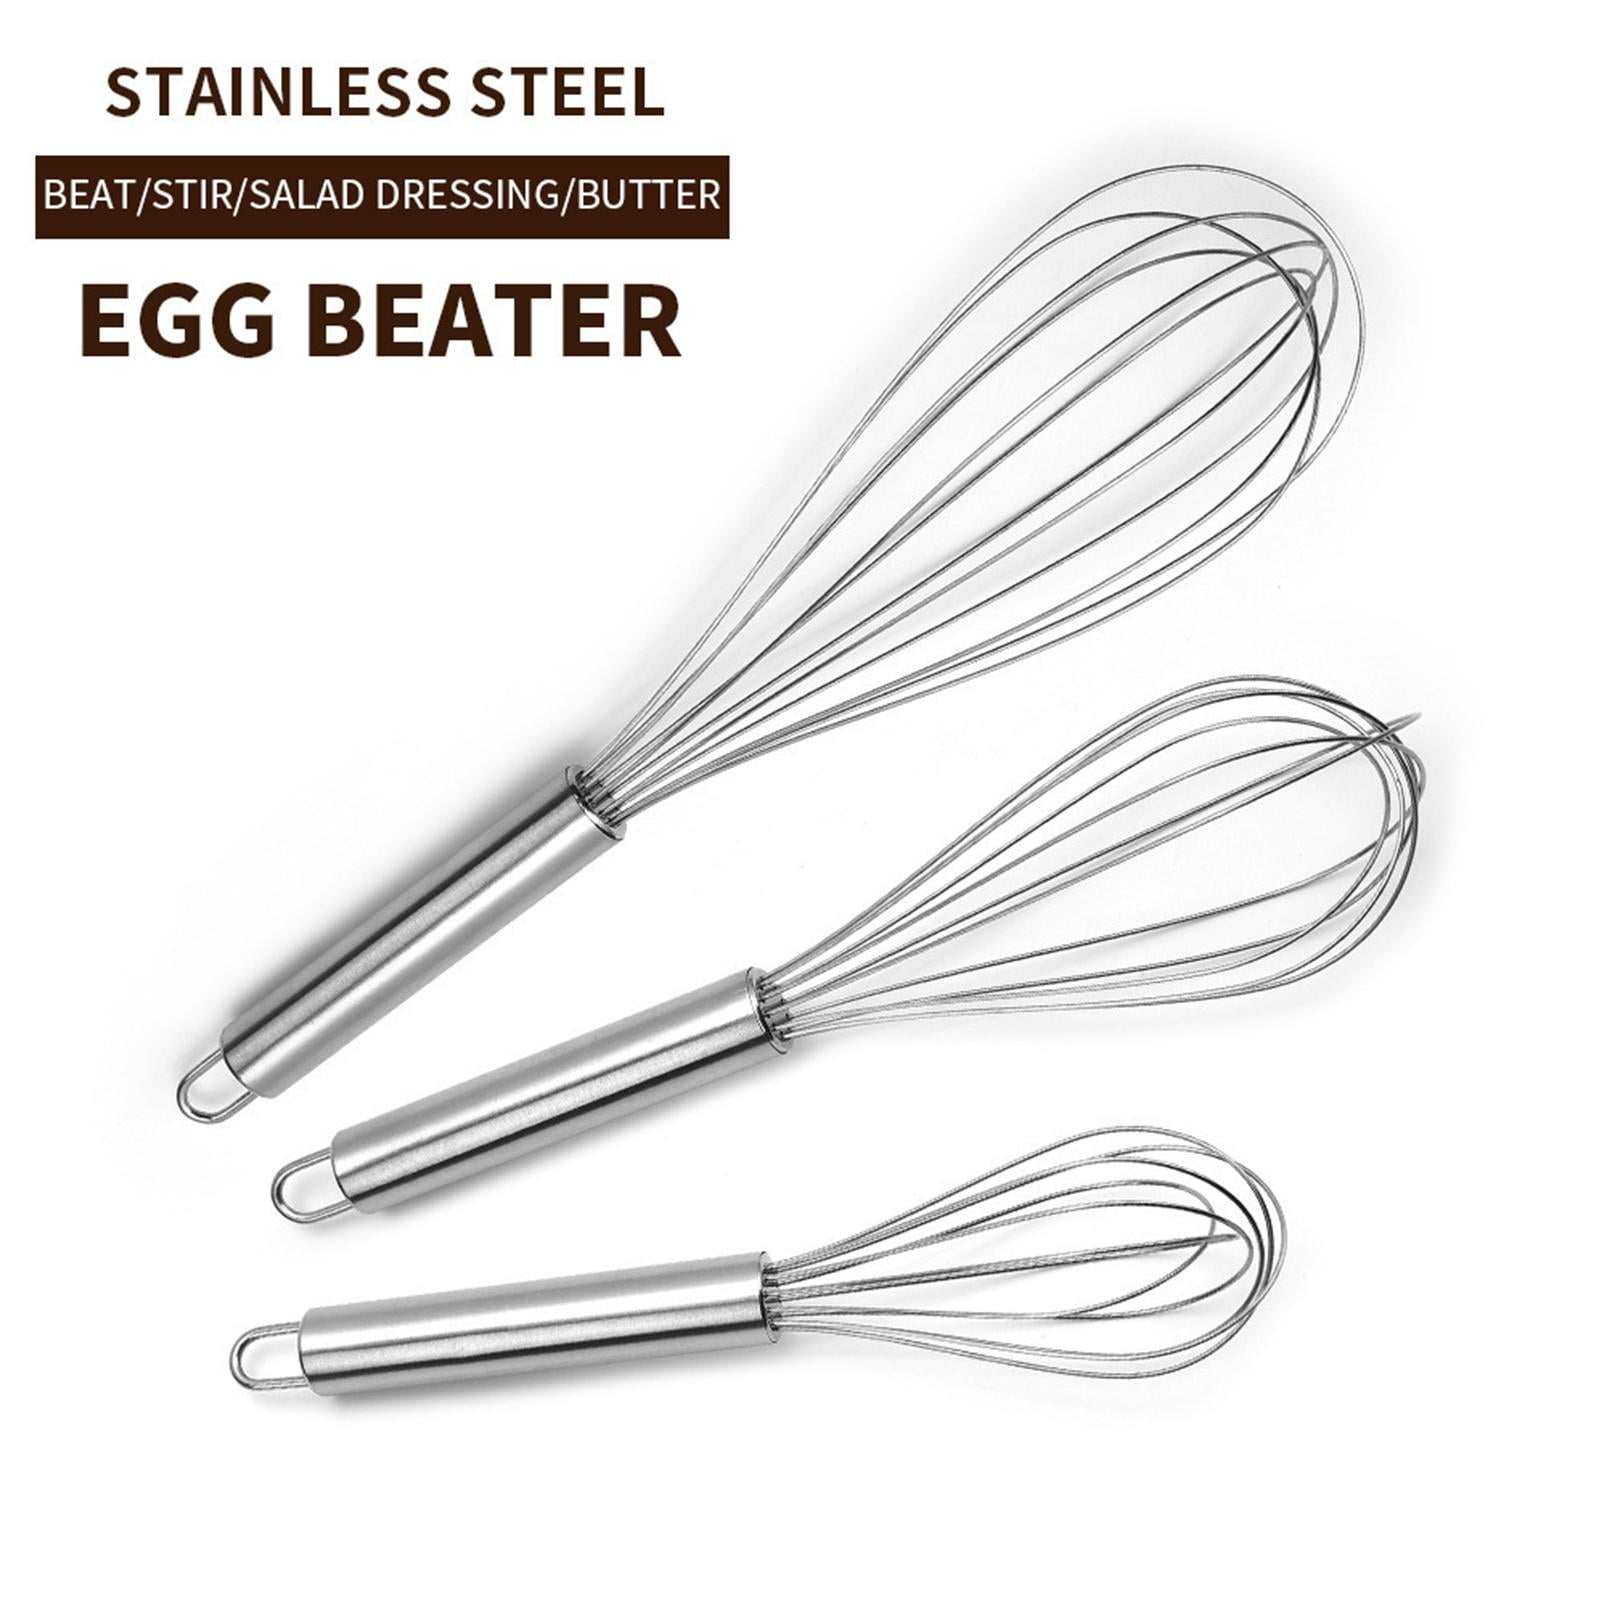 HOTEC 4 Pieces Stainless Steel Whisks Set Wire Whisk Balloon Whisk Egg  Beater Kitchen Utensils for Stirring, Beating, Blending